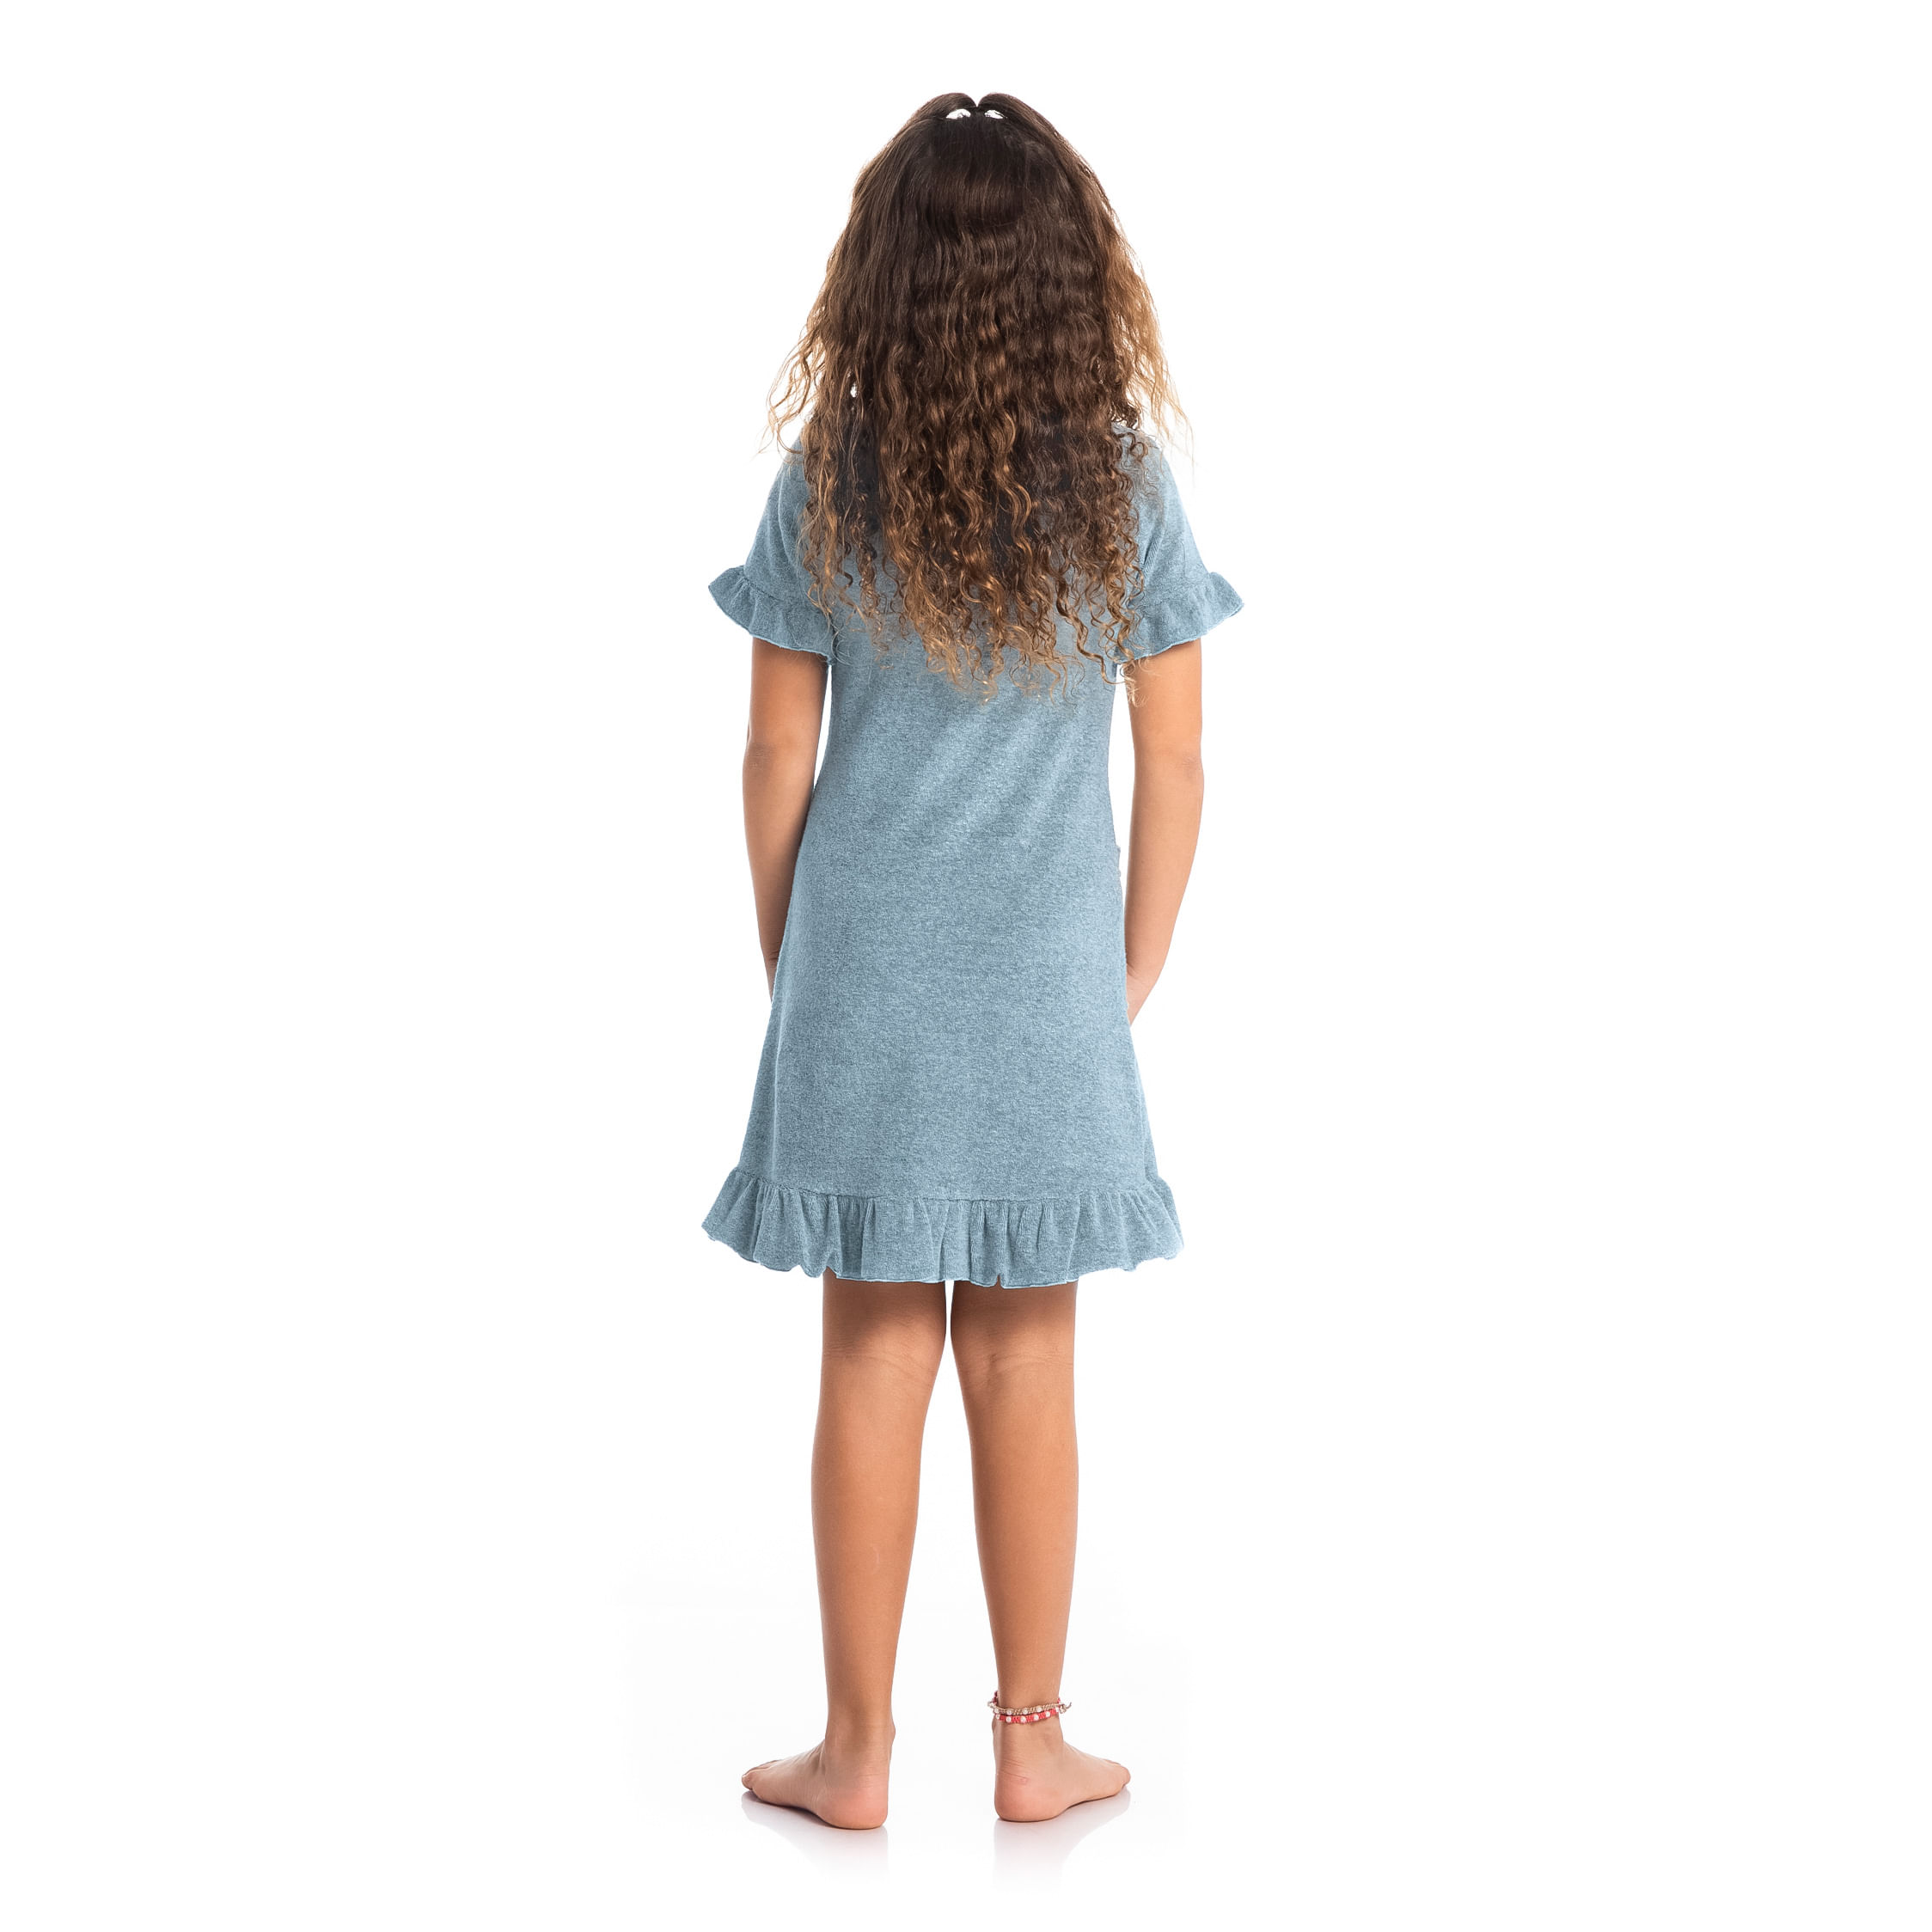 Robe-Infantil-Feminino-Curto-Em-Atoalhado-Lily-Azul-Daniela-Tombini